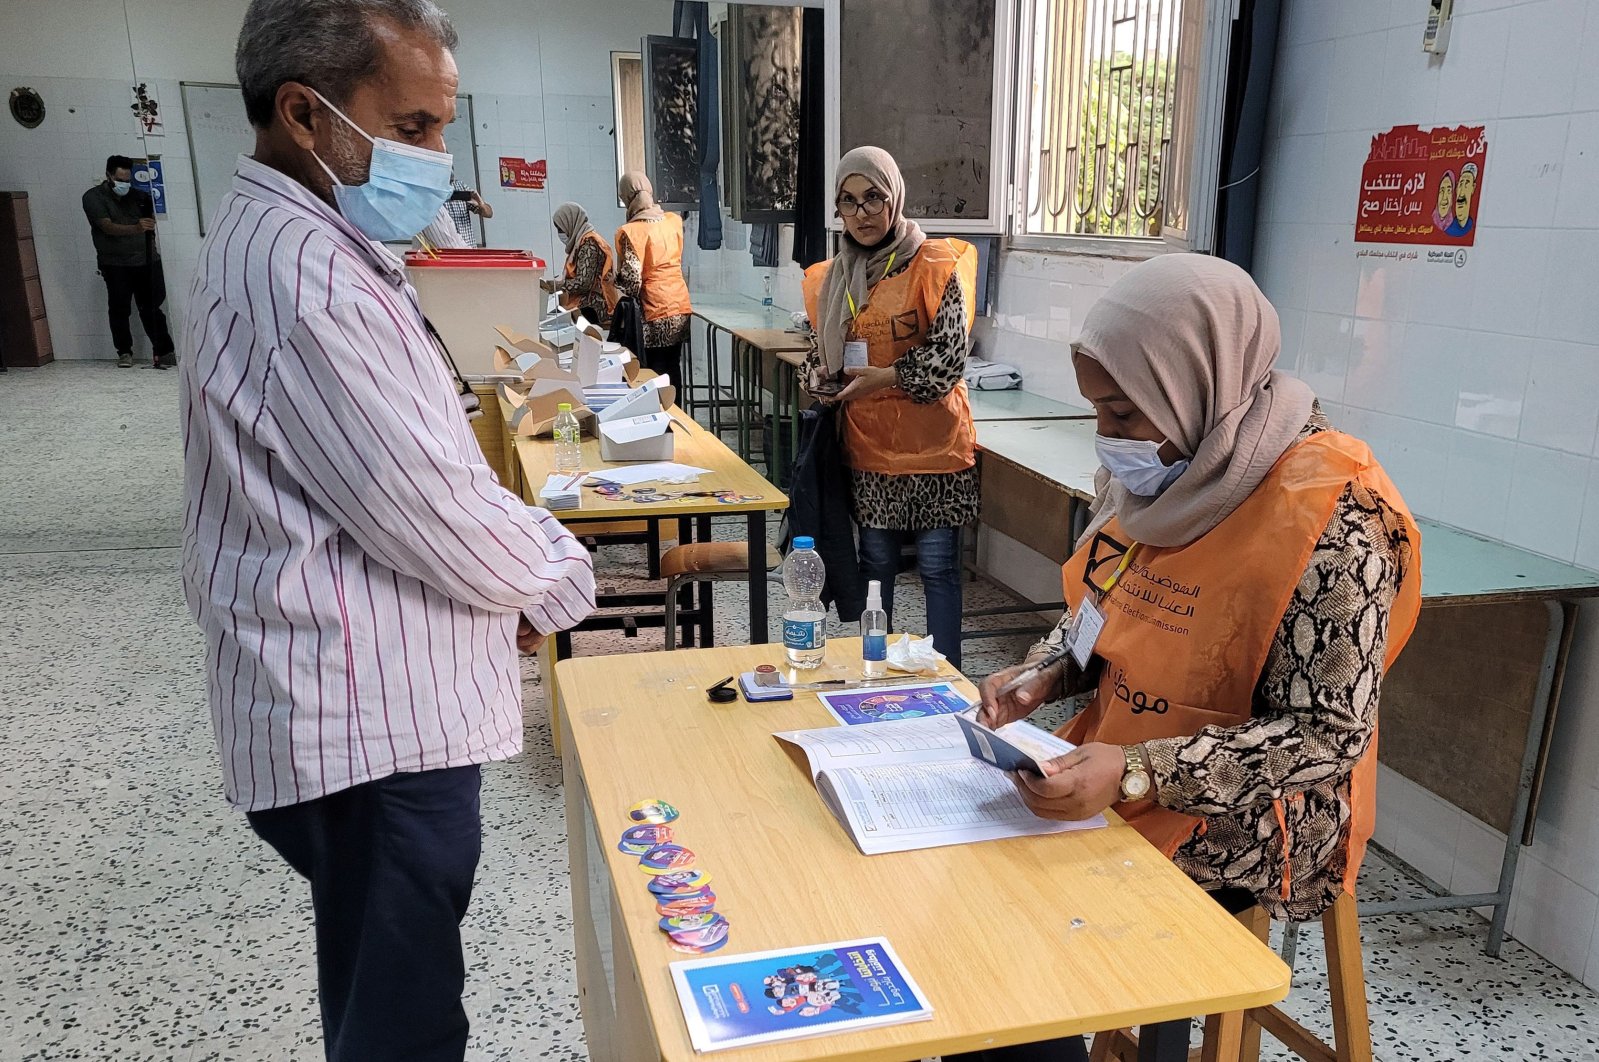 A Libyan man registers to vote inside a polling station in Tripoli, Libya, Nov. 8, 2021. (AFP Photo)